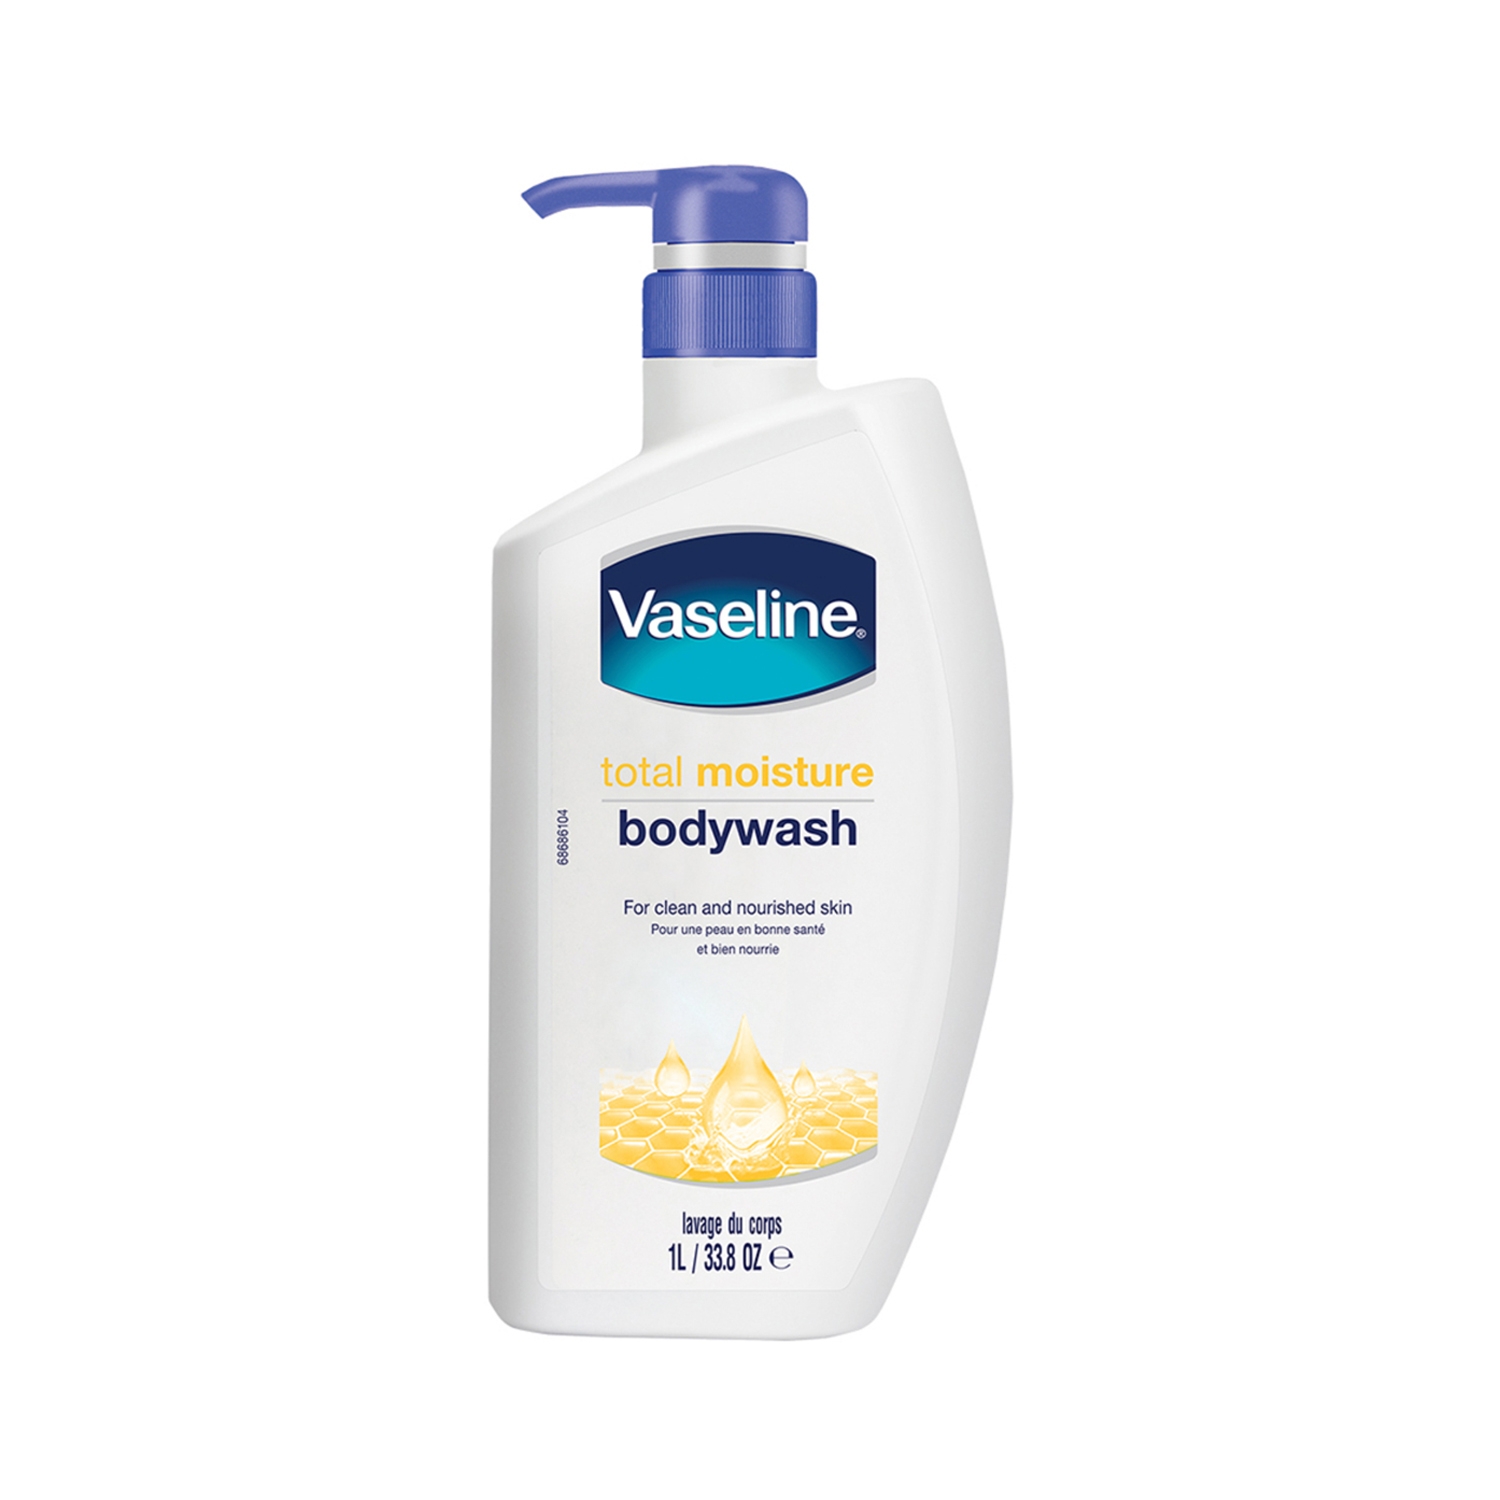 Vaseline | Vaseline Total Moisture Body Wash for Healthy & Fresh Skin Gentle Body Cleanser (1L)